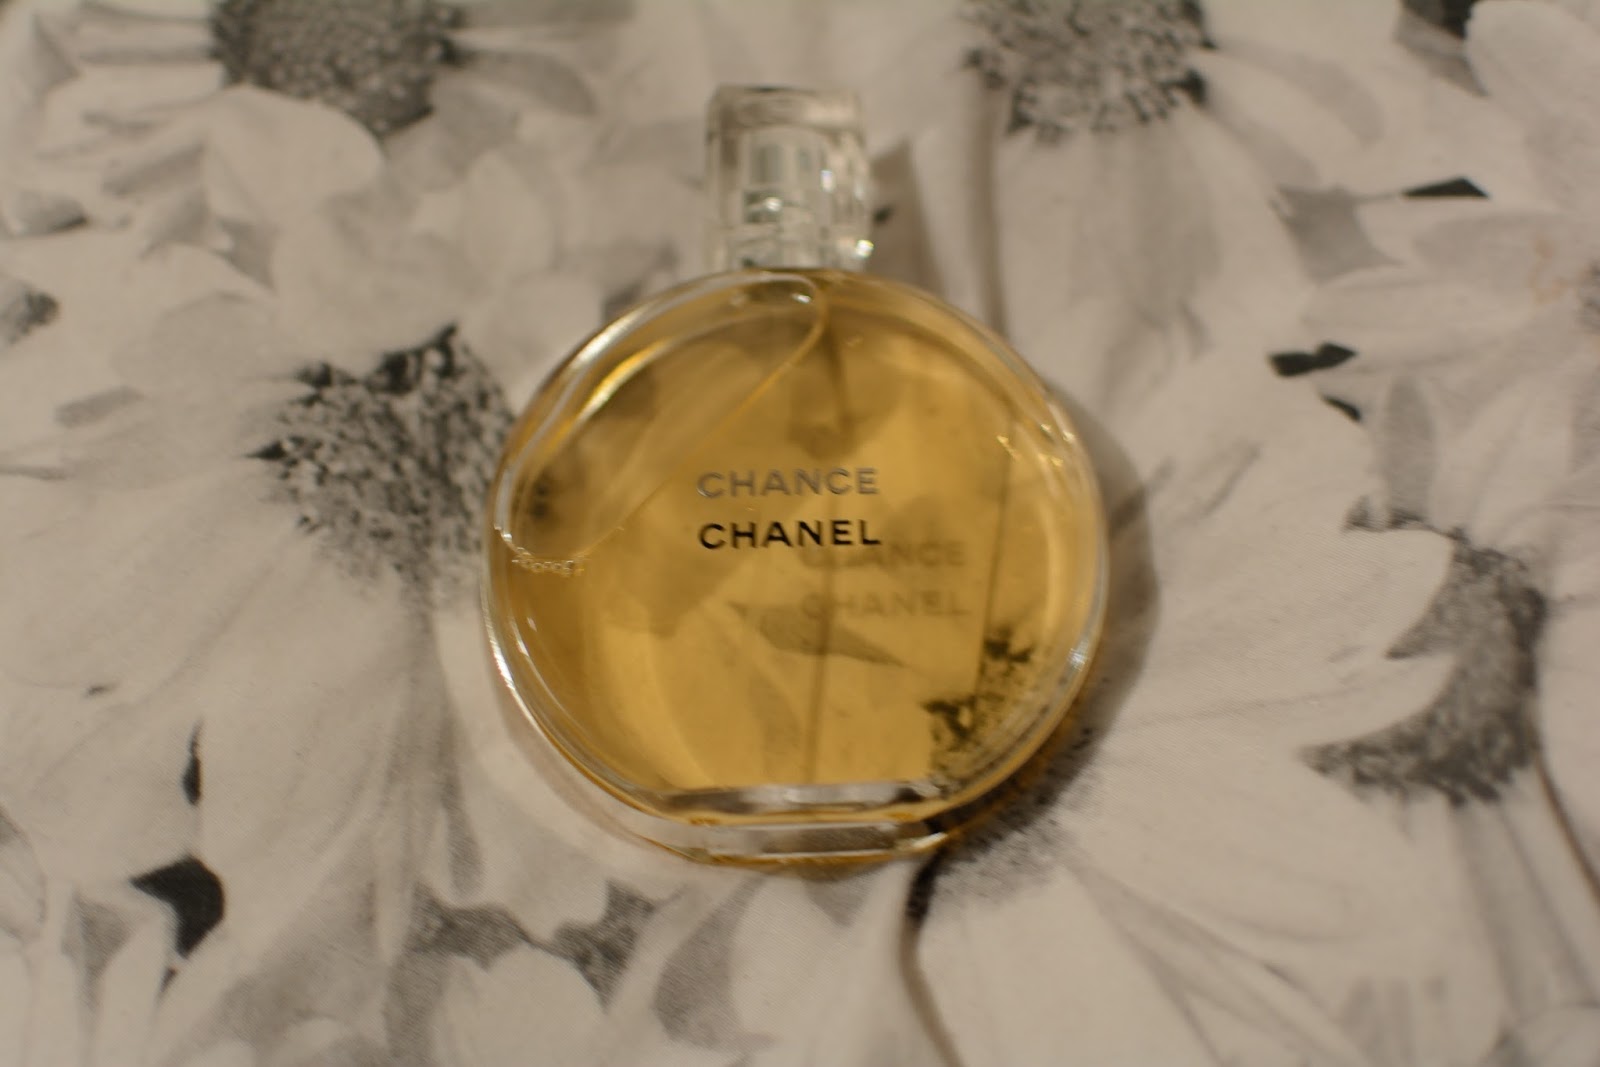 Perfume Review: Chanel Chance - Kayleigh Zara